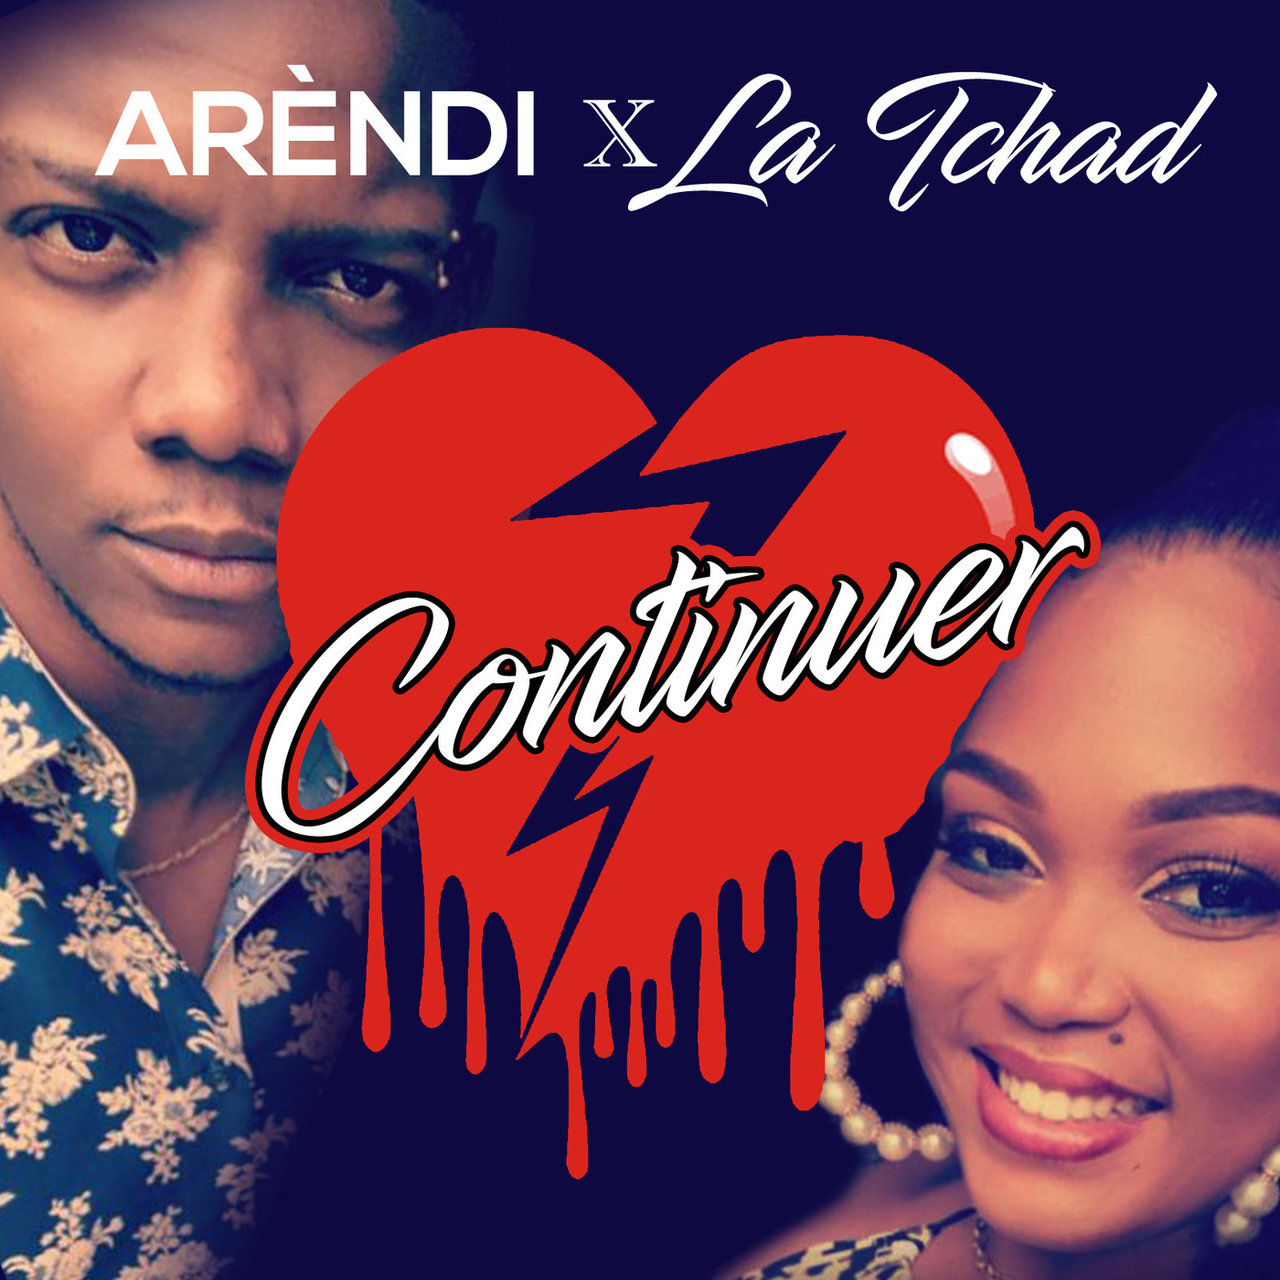 Arèndi - Continuer (ft. La Tchad) (Cover)